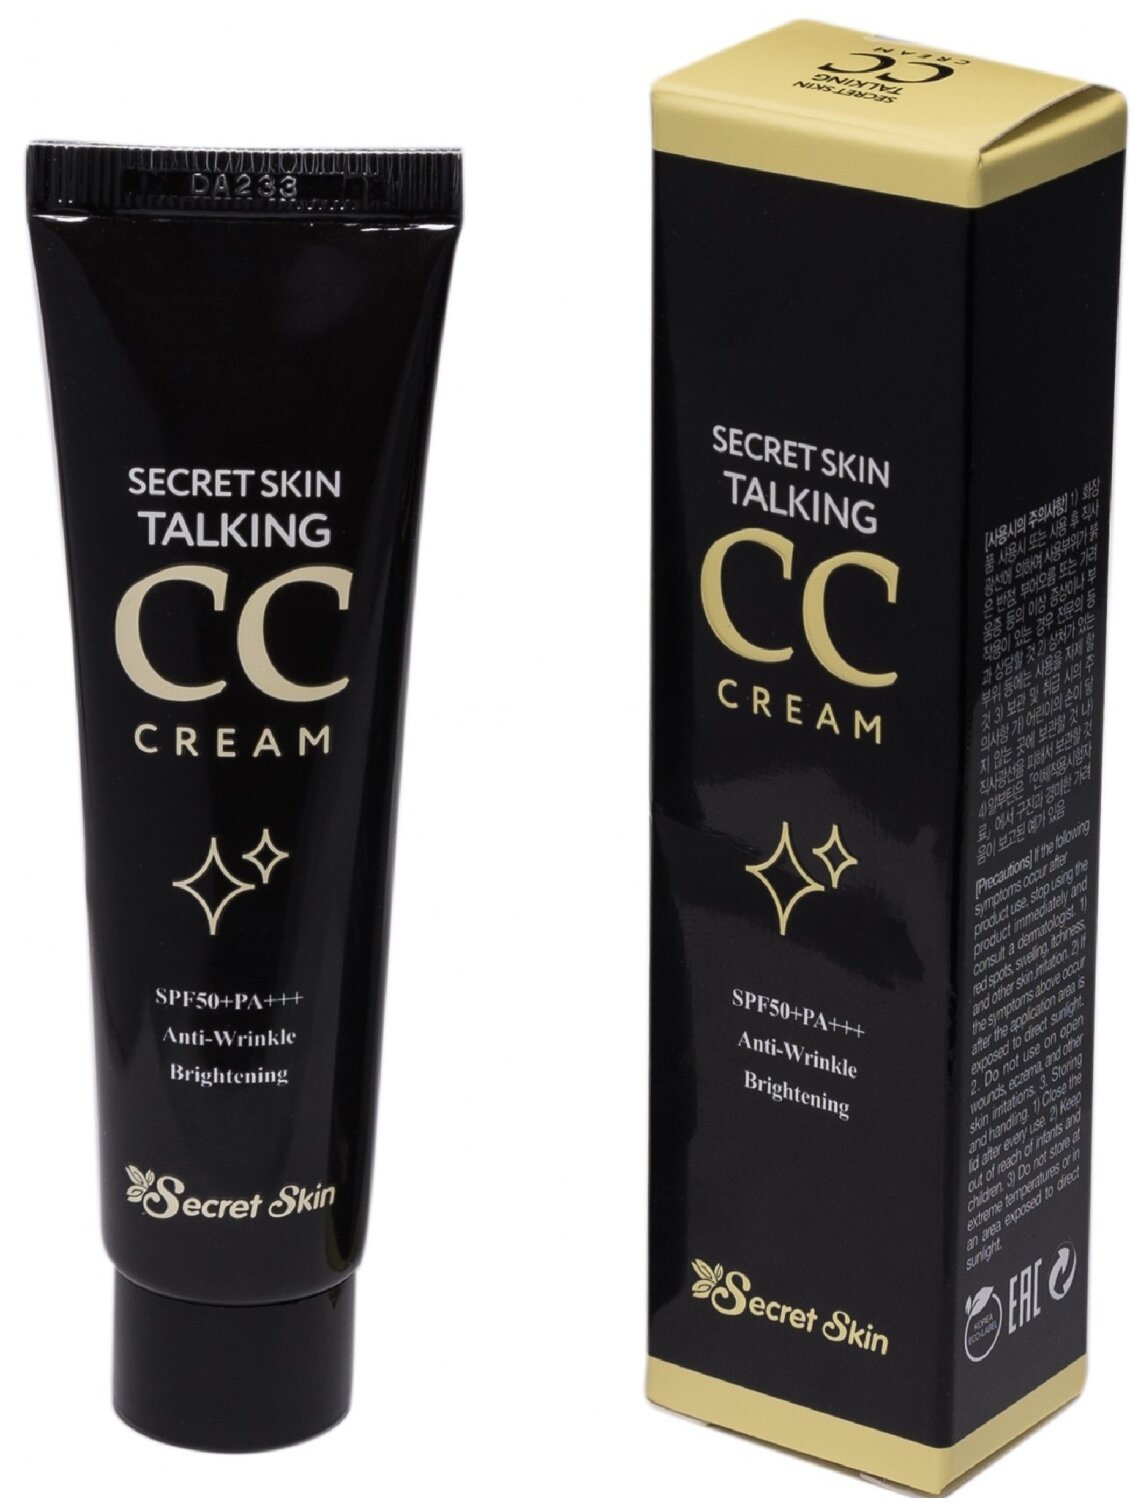 Secret Skin CC крем Talking CC Cream выравнивающий тон, 30 мл.